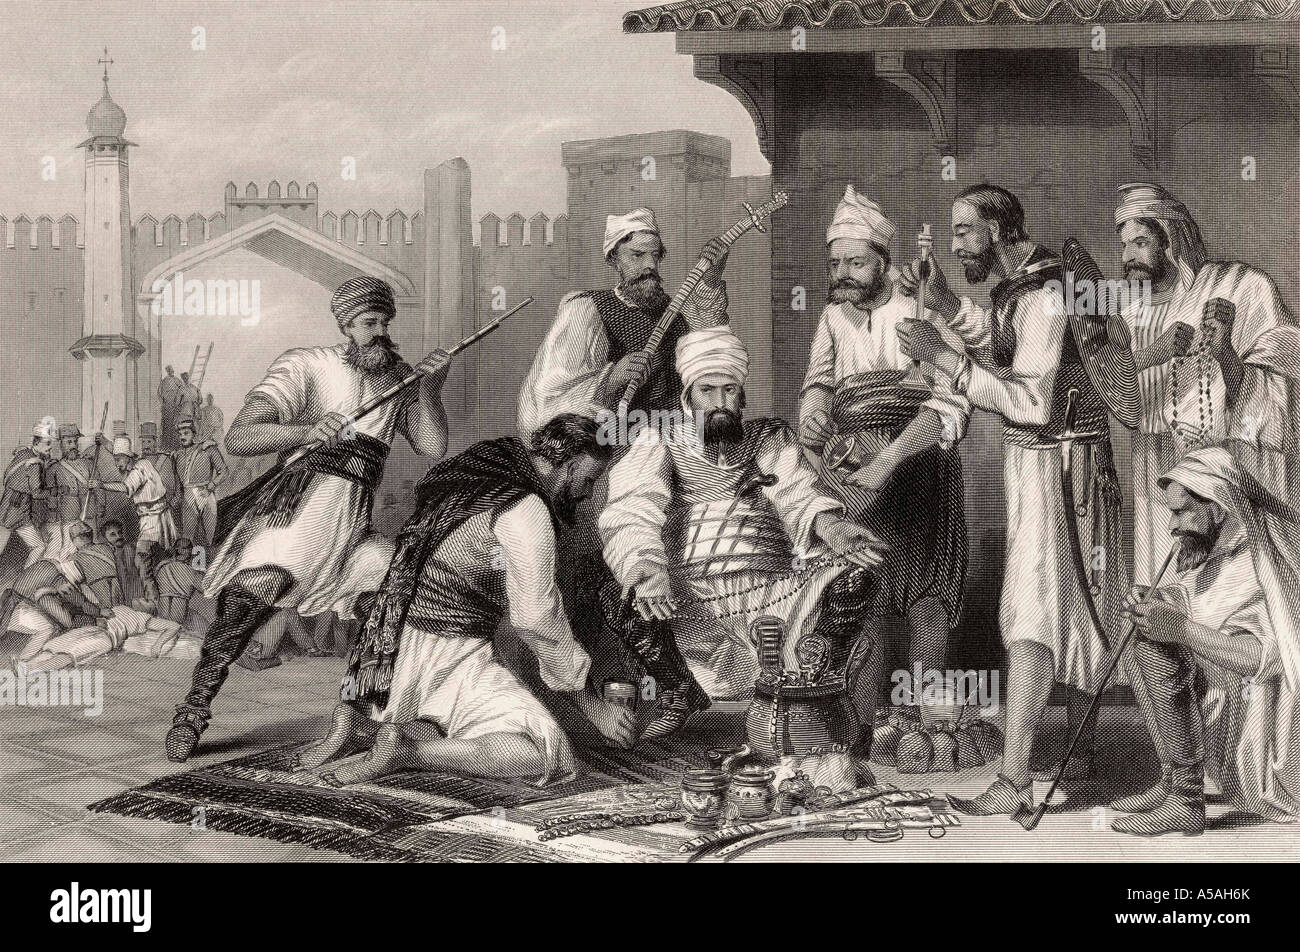 Le truppe Sikh dividono i bottoni presi dai mutinesi durante il Mutiny indiano. Foto Stock